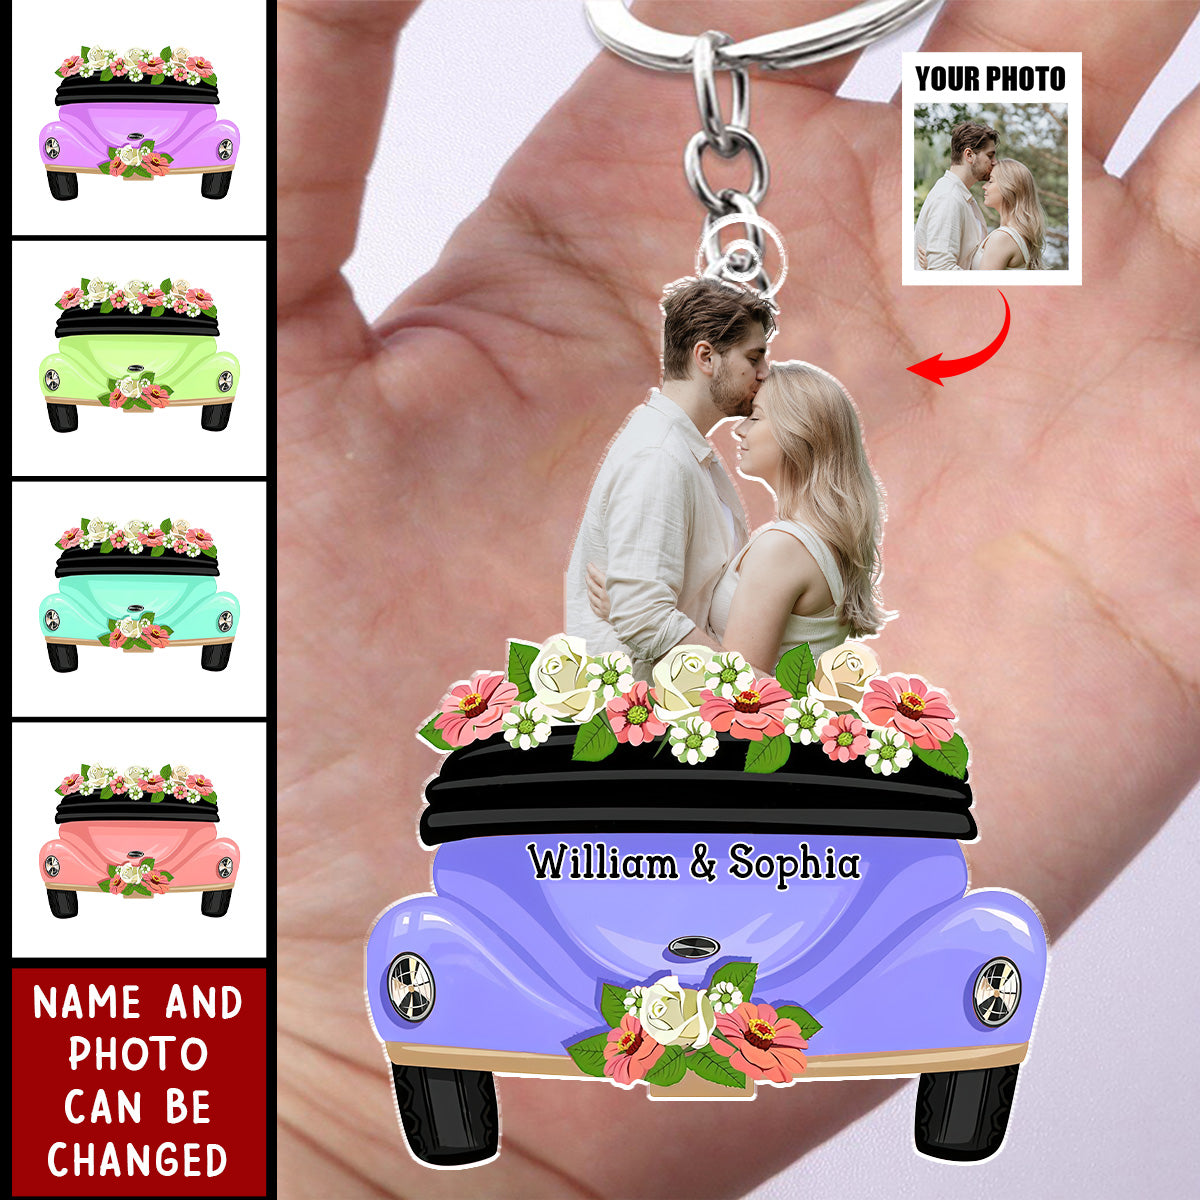 Personalized Acrylic Keychain - Wedding Anniversary Gift - Upload Photo - Gift For Husband Wife